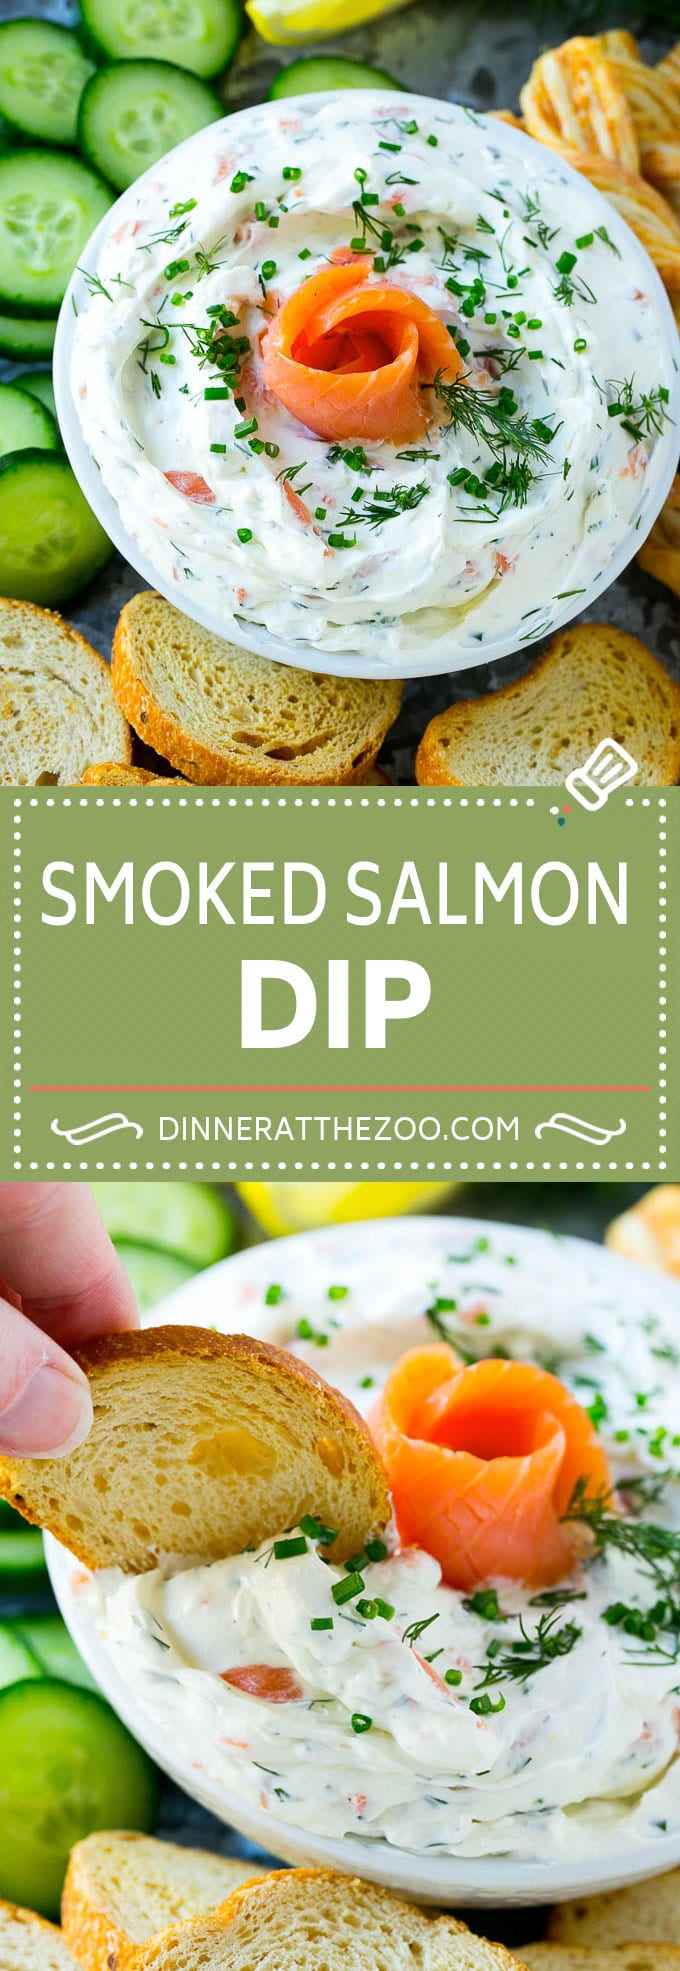 Smoked Salmon Dip | Cream Cheese Salmon Dip | Salmon Dip | Smoked Salmon Appetizer #salmon #dip #smokedsalmon #appetizer #dinneratthezoo